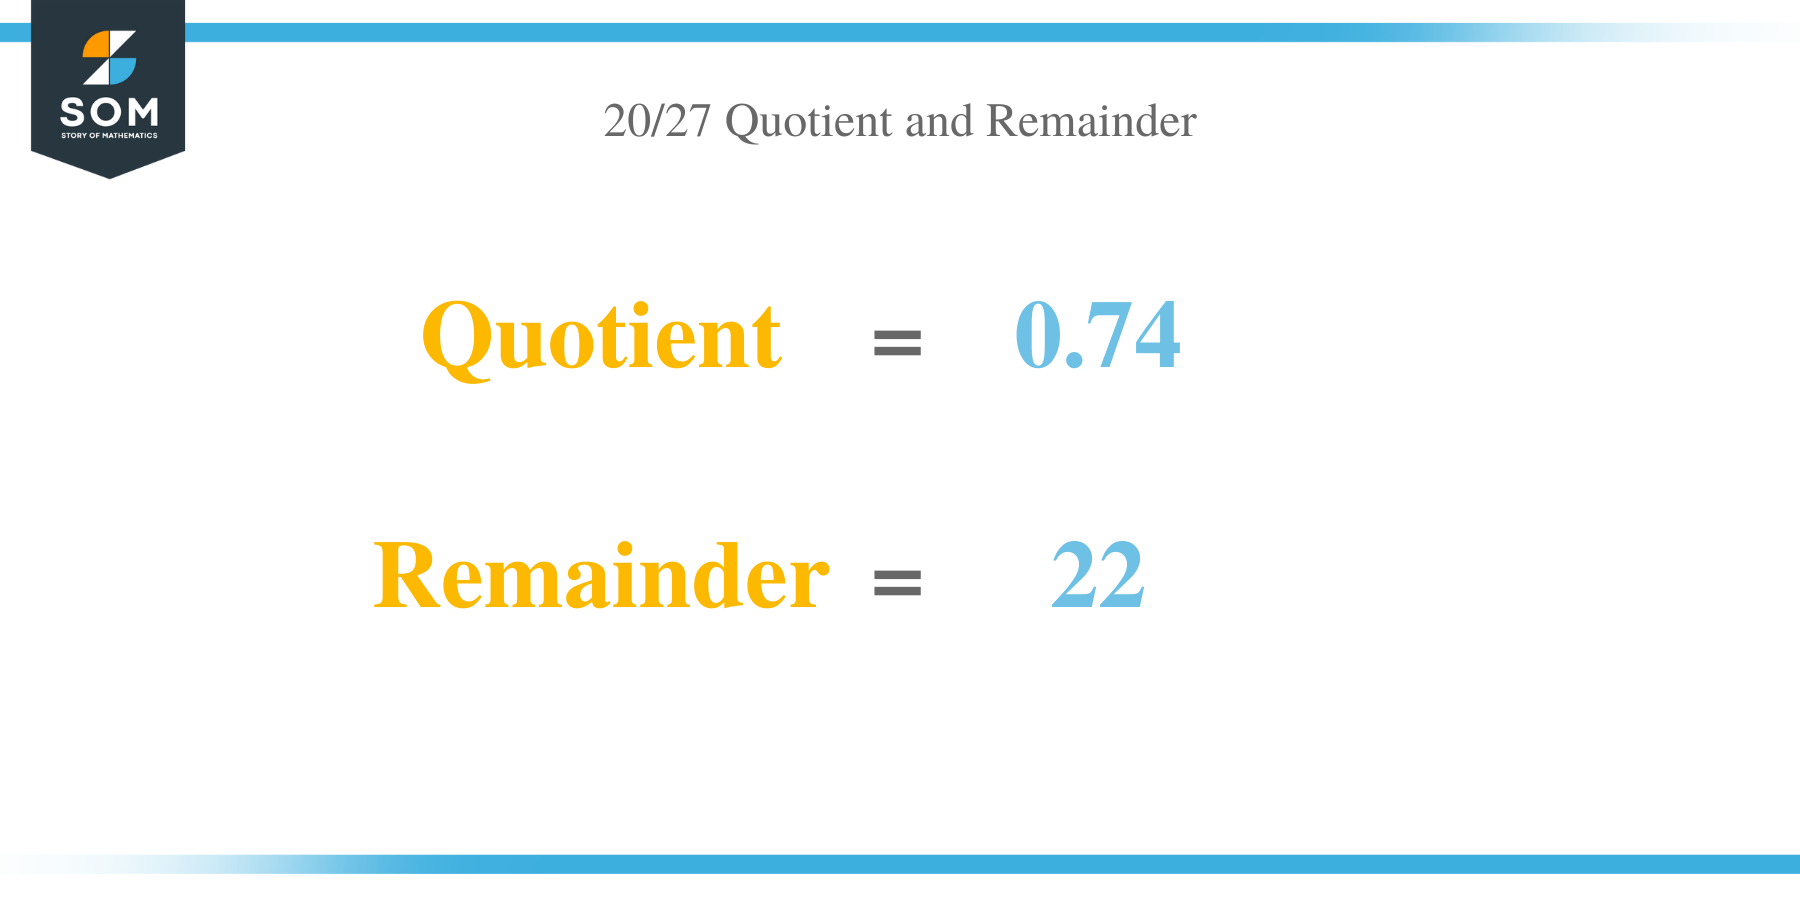 Quotient and Remainder of 20 per 27